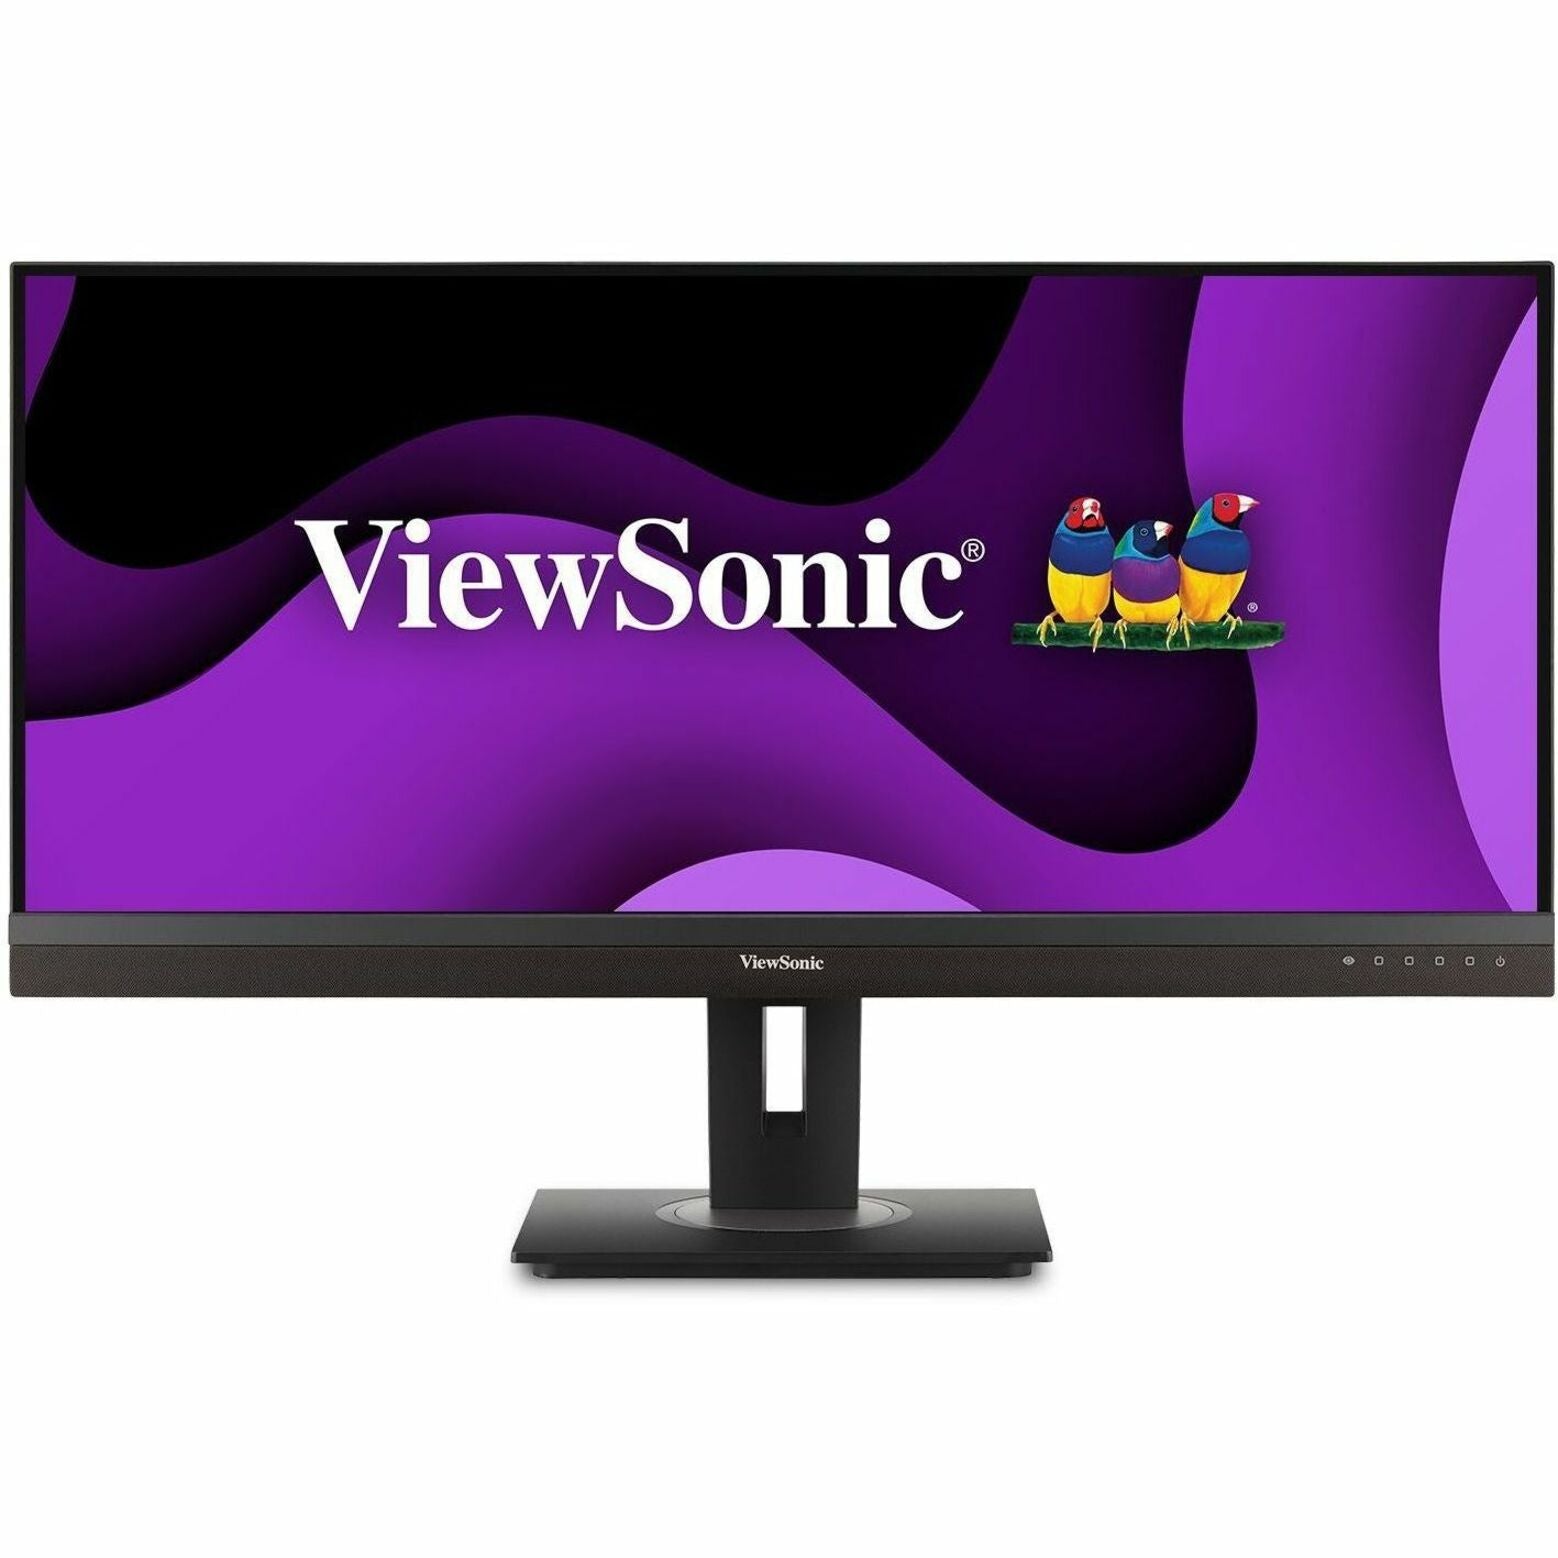 ViewSonic VG3456A 34" IPS LCD WQHD Monitor (HDMI, DP, and USB-C), 300 Nit Brightness, 16.7 Million Colors